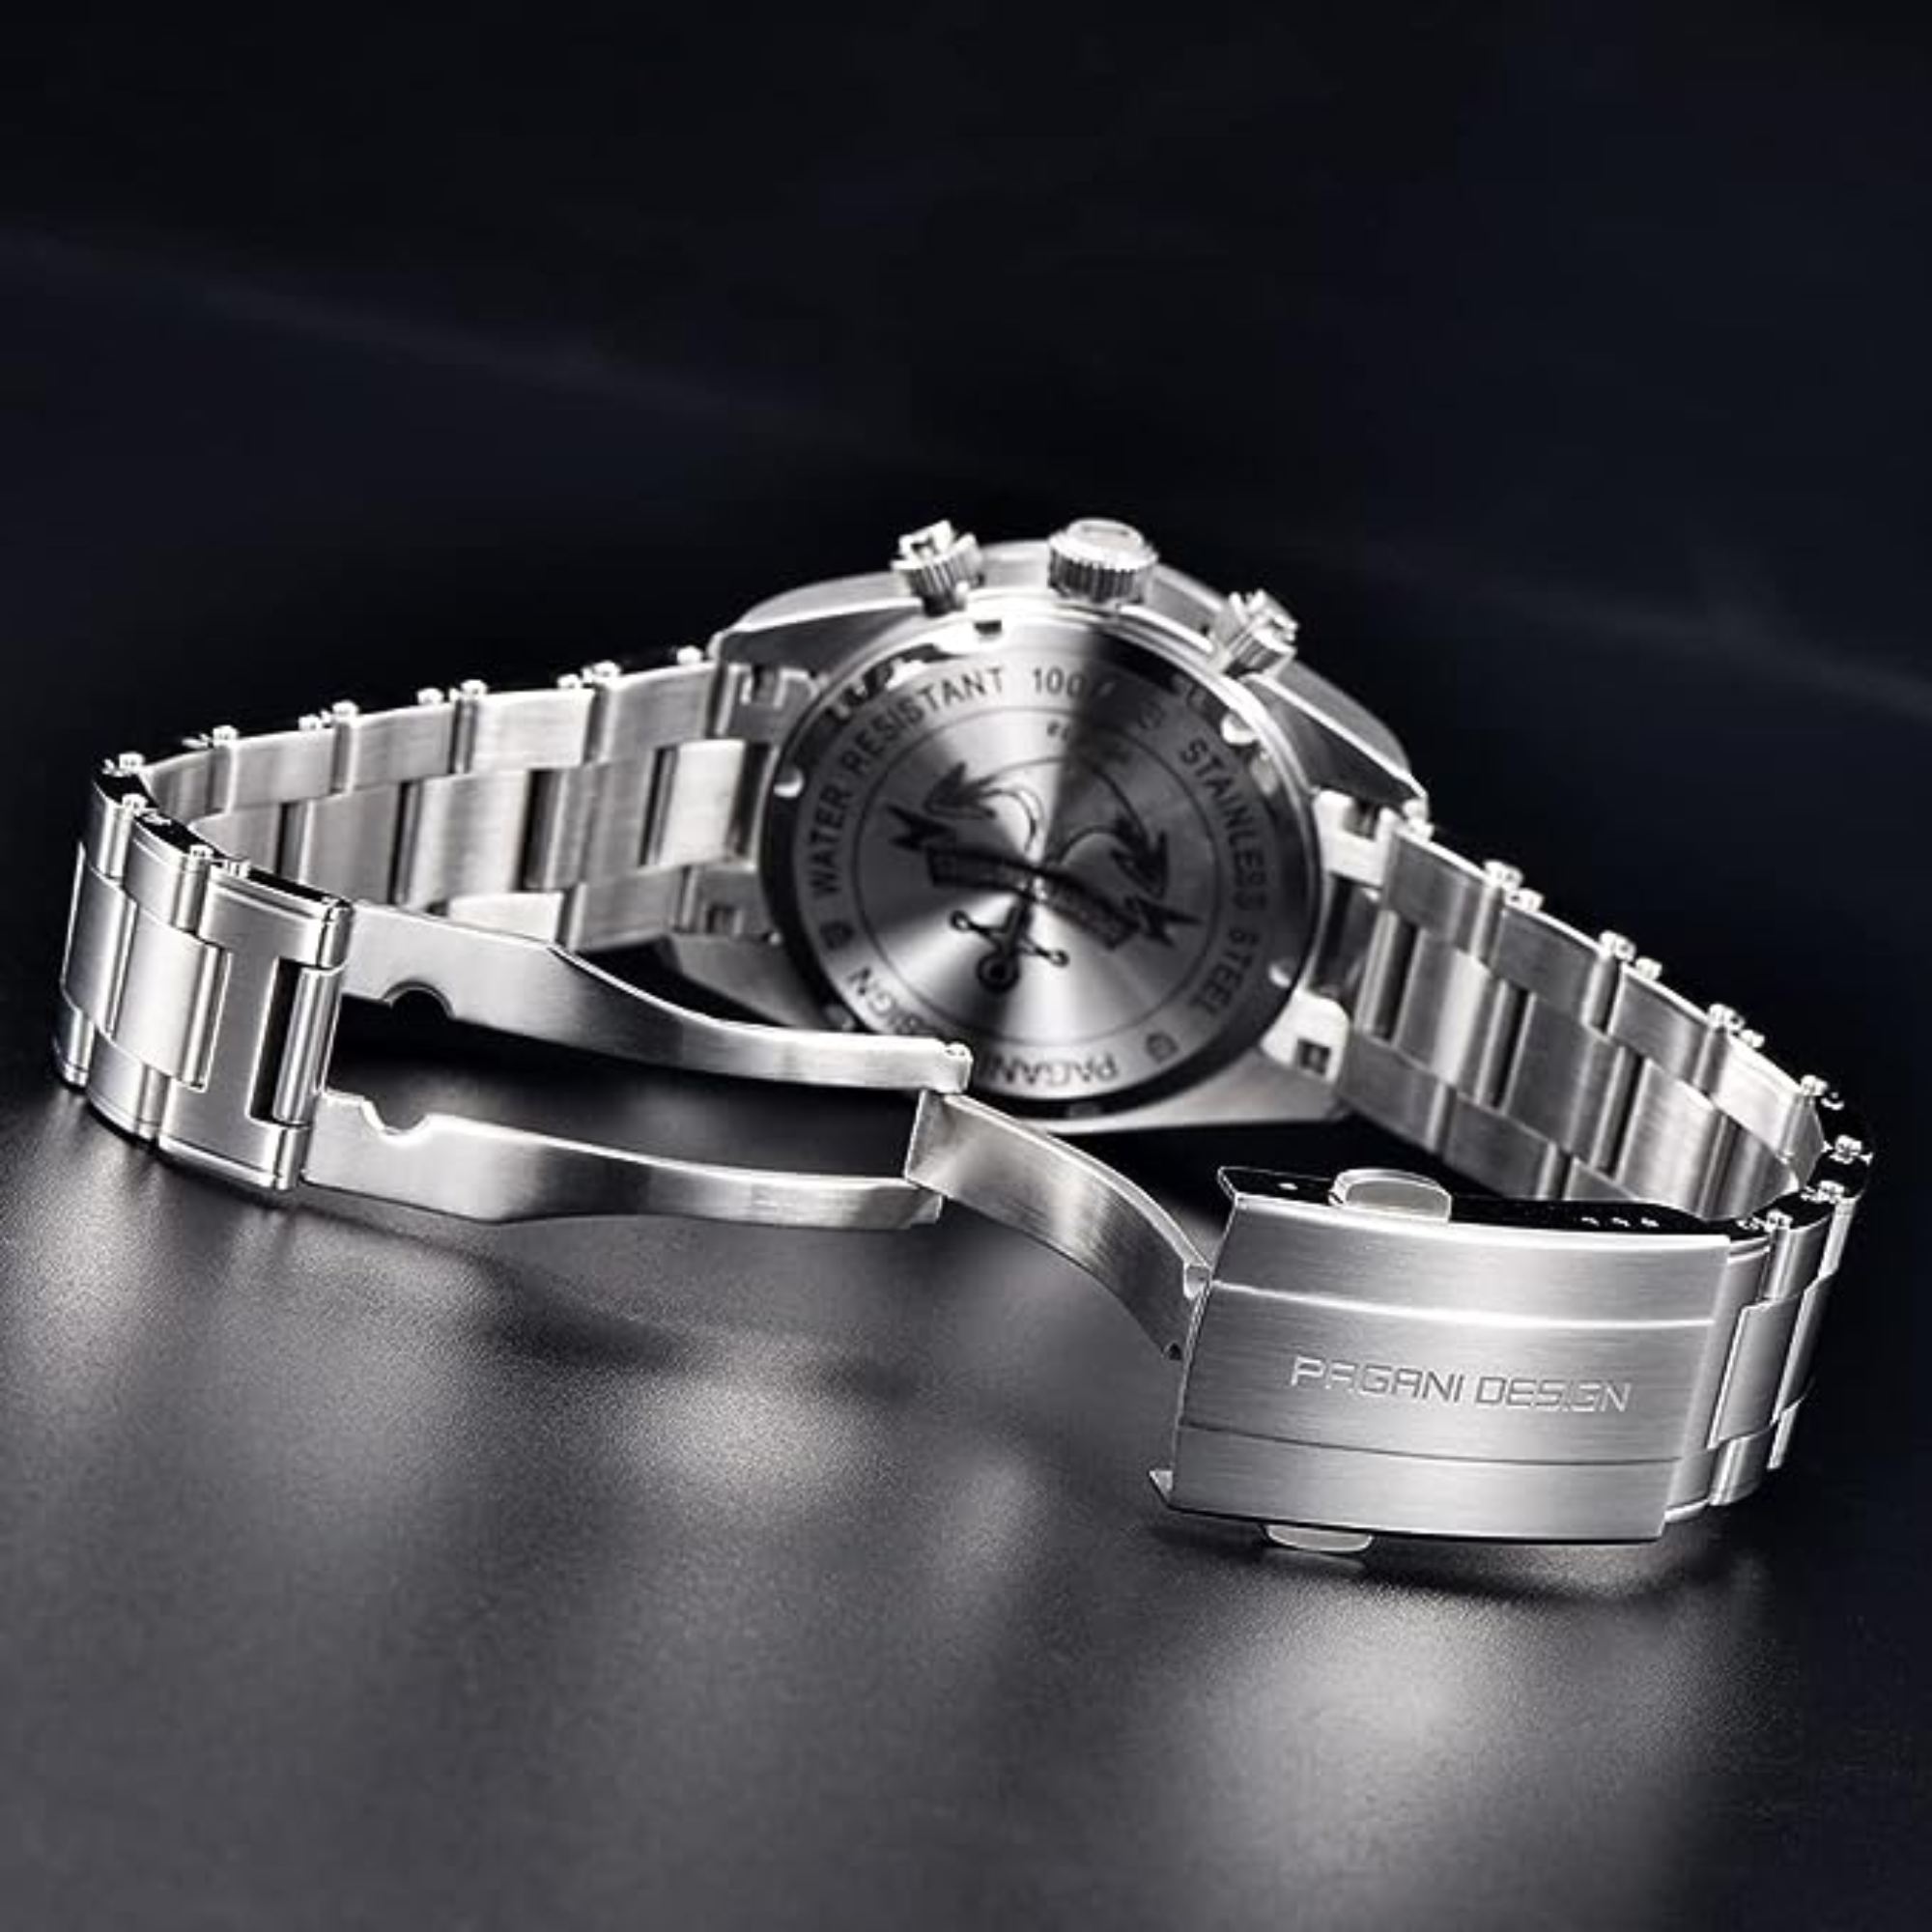 Pagani Design PD-1718 Panda Dial Men's Chronograph Watches Japan VK64 Movement Stainless Steel 100M Waterproof Men Fashion Casual Watch - White Dial